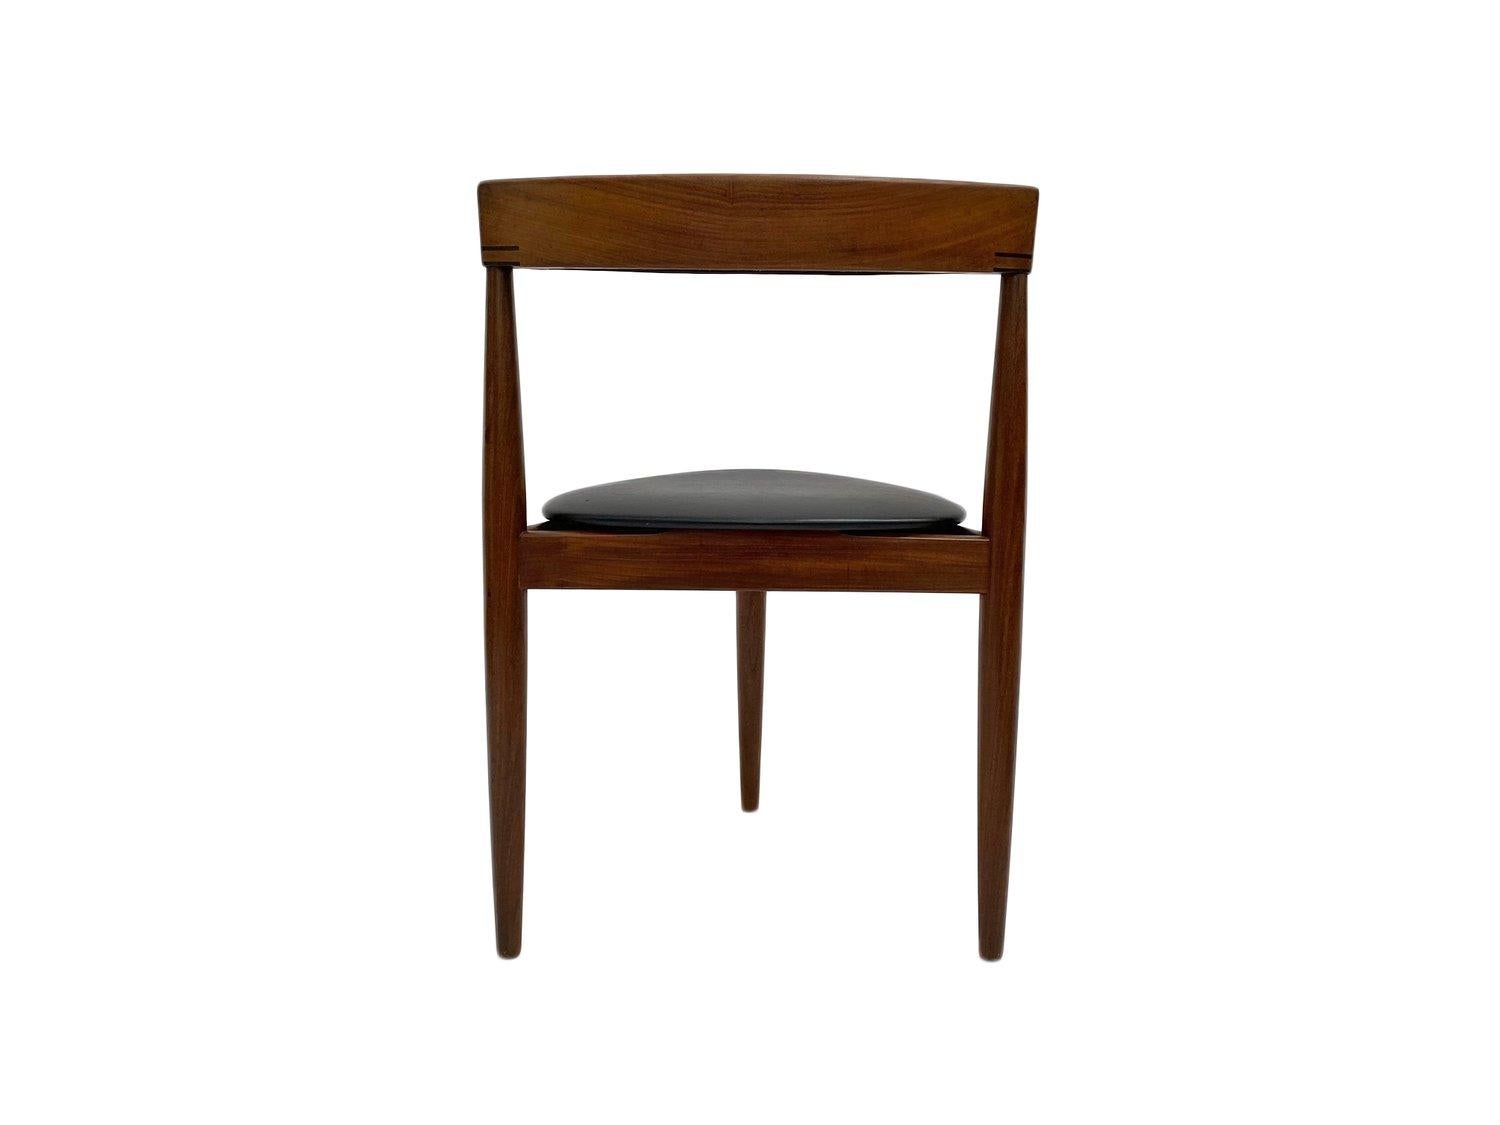 Danish Hans Olsen for Frem Røjle 'Roundette' Series Teak Dining Table and Chairs 4